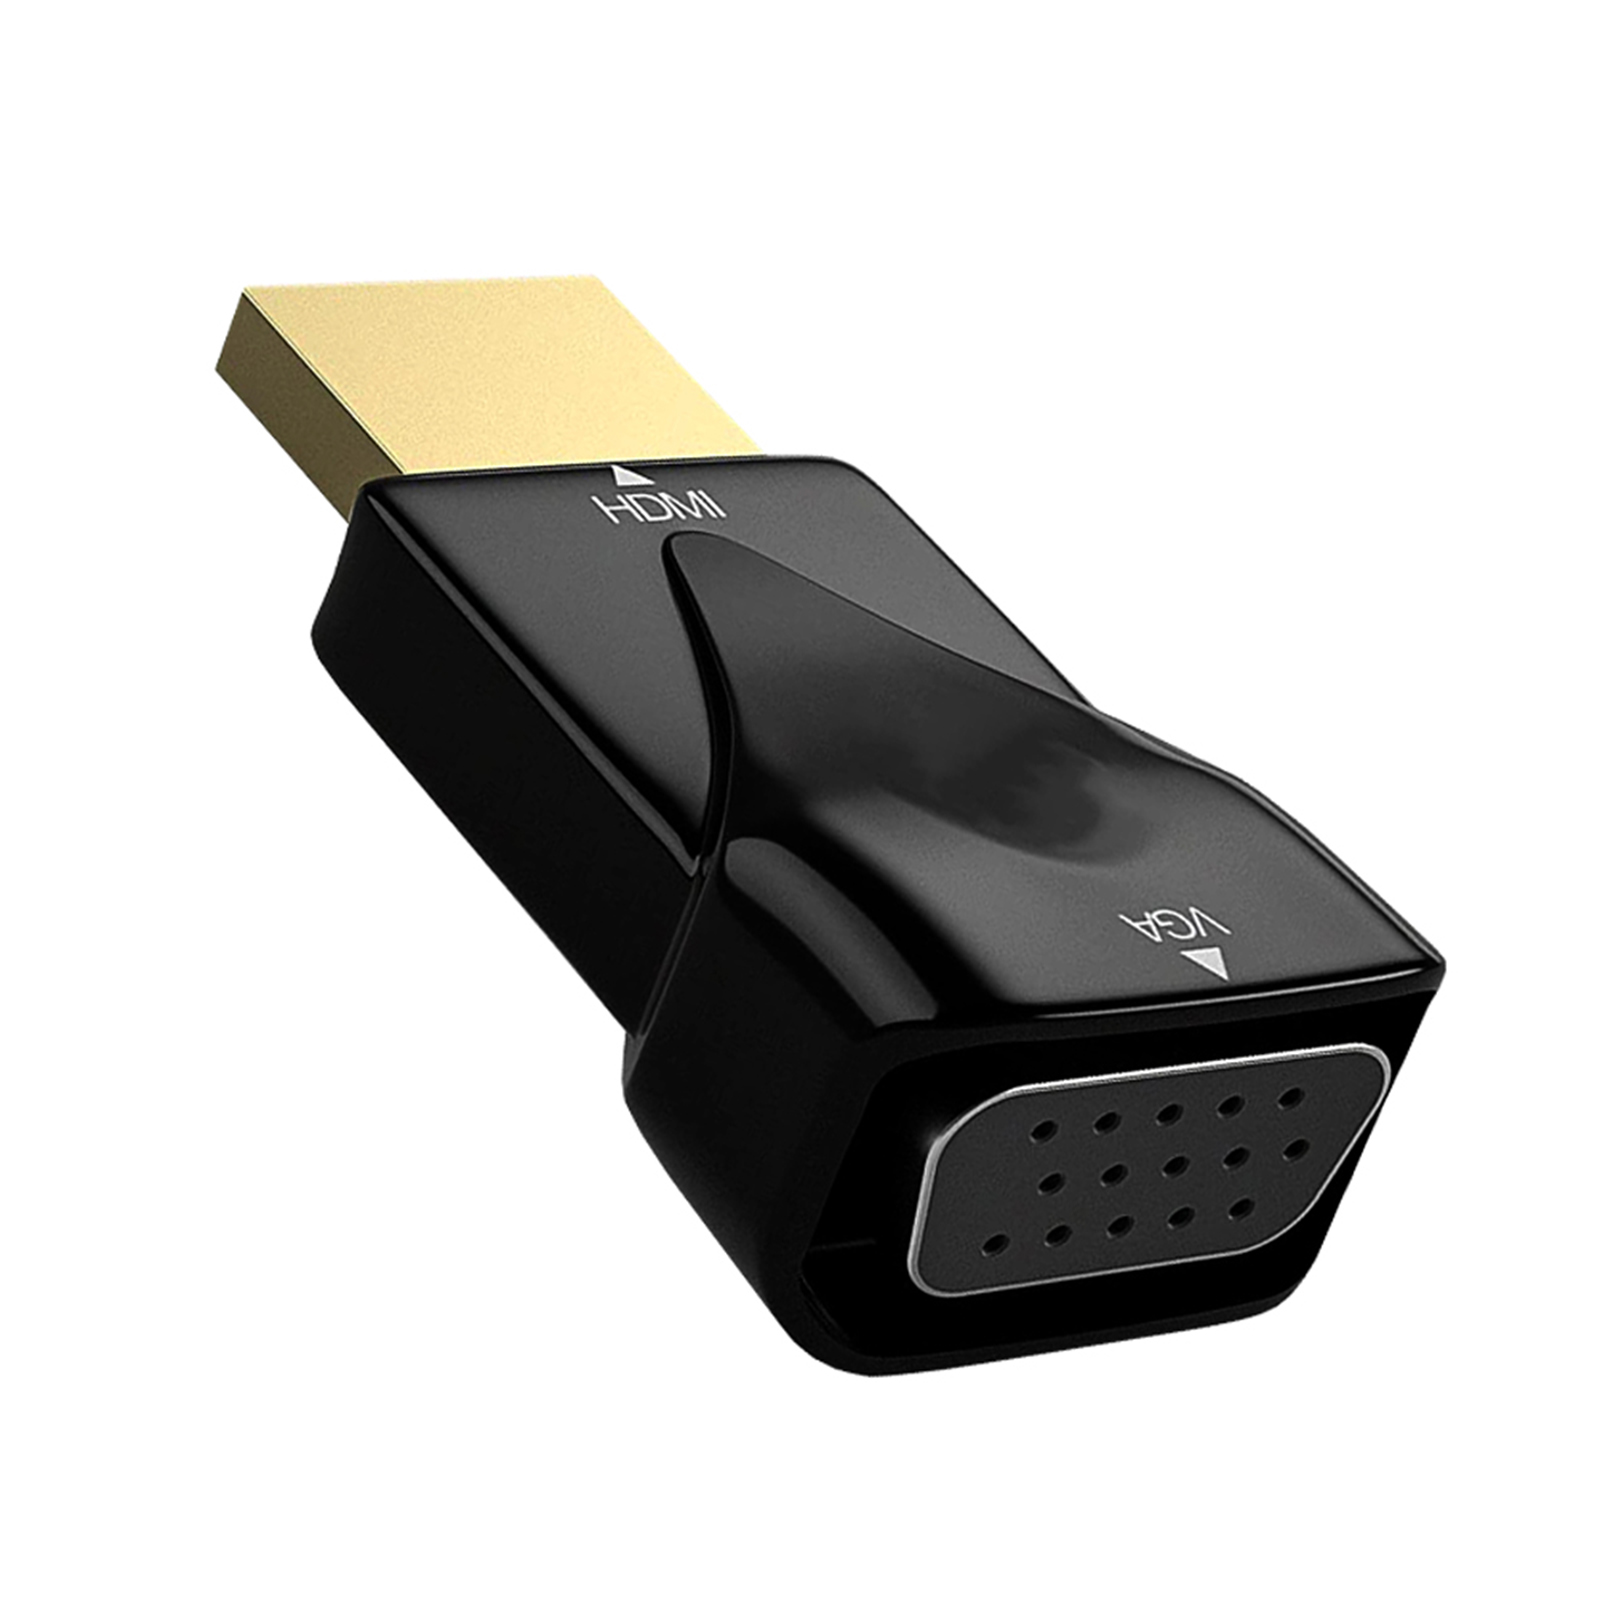 Hdmi-compatible To Vga Adapter Hdmi-compatible Vga Converter Cable Black